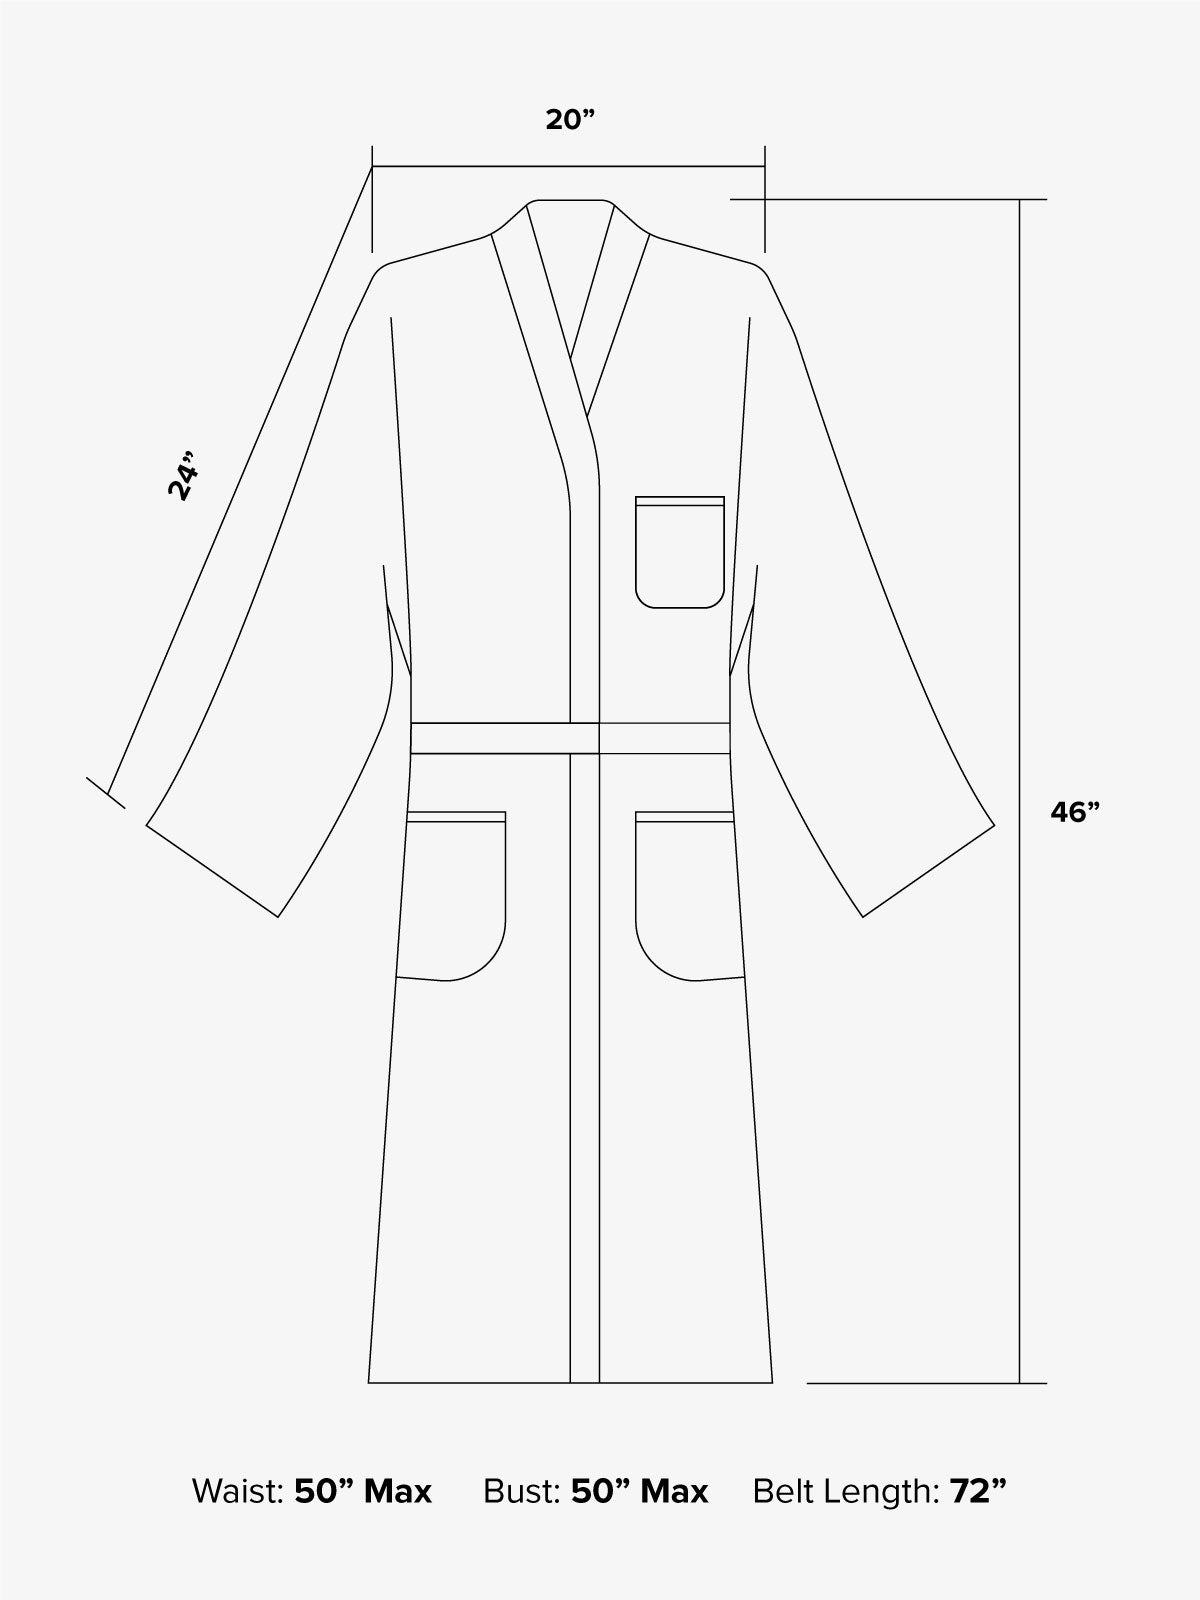 Hotel CALPAK robe dimensions